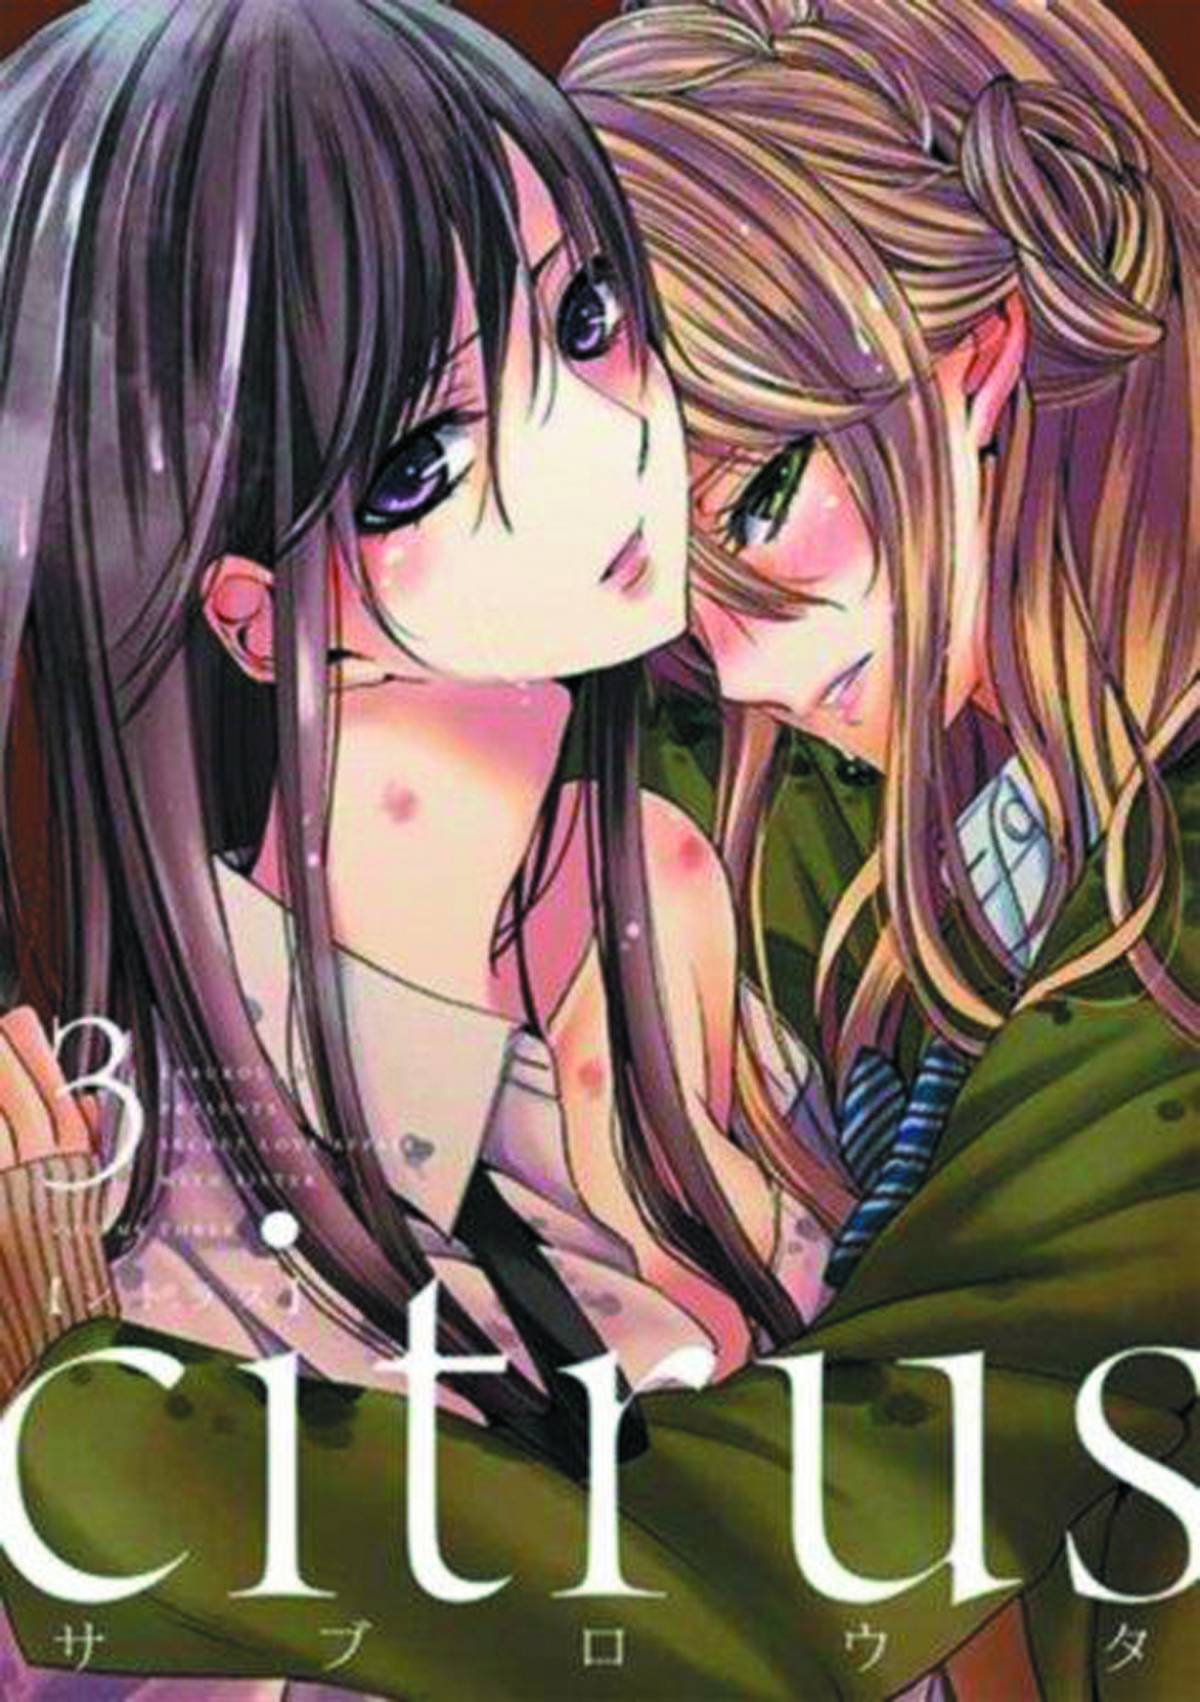 Citrus Manga Volume 3